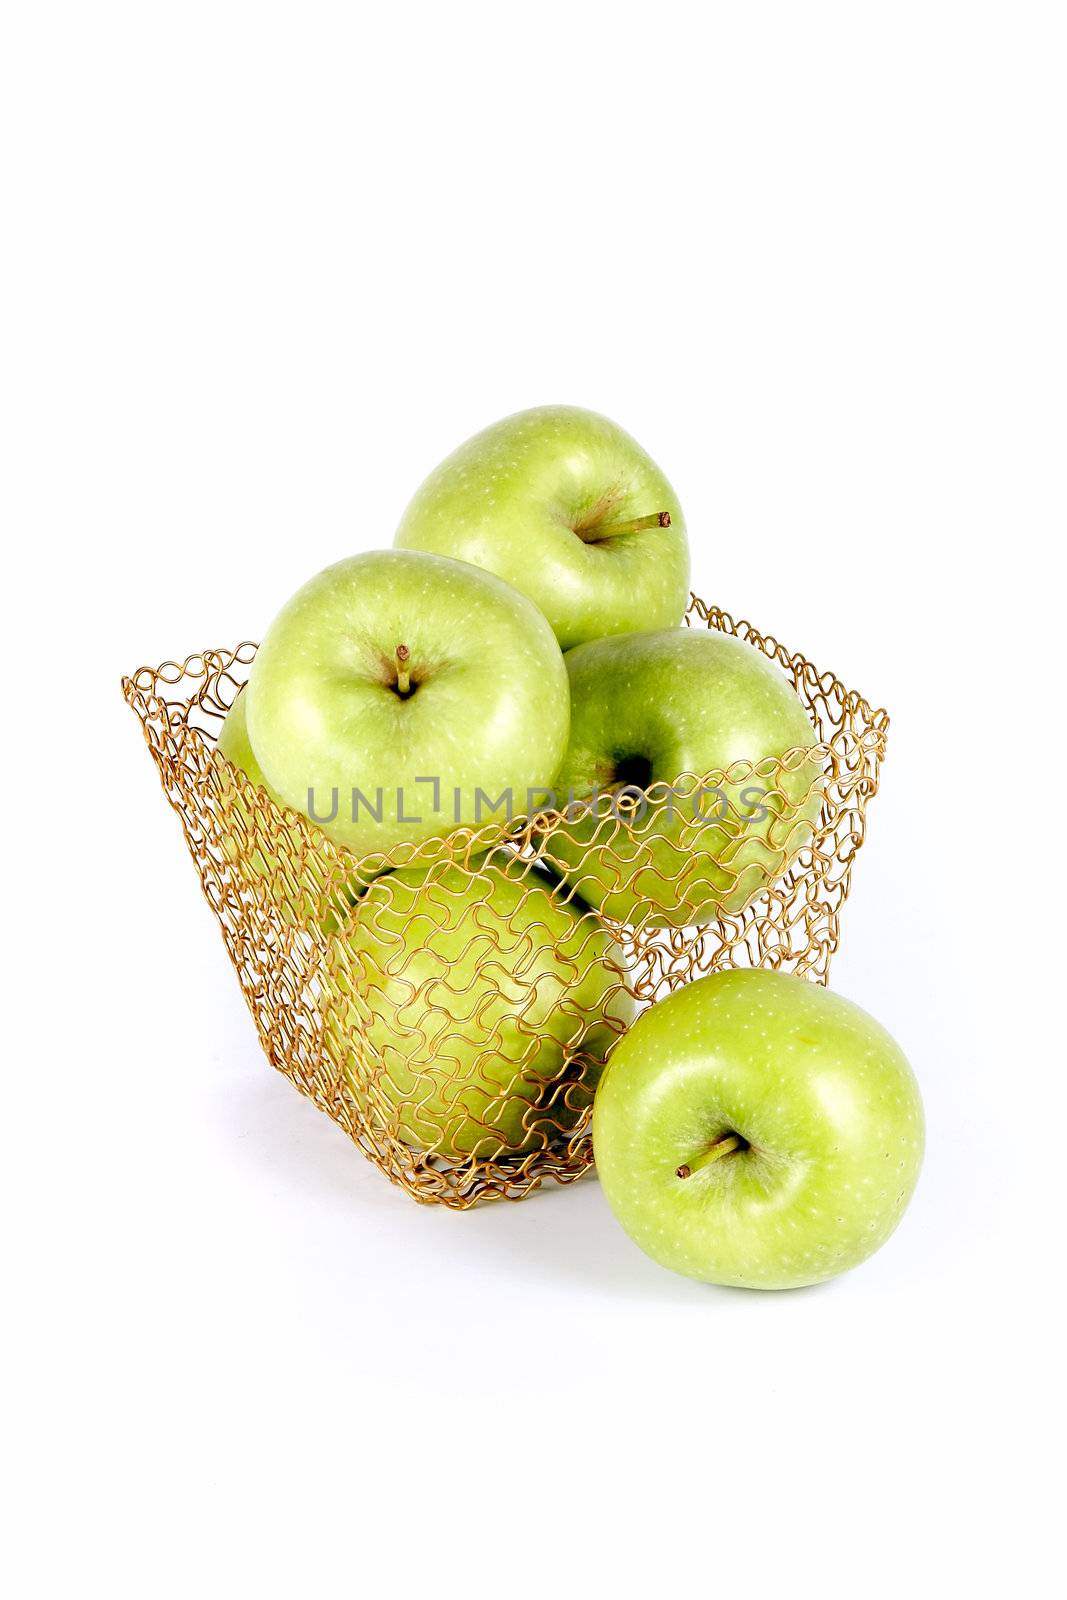 Green apples in a gold basket by Azaliya